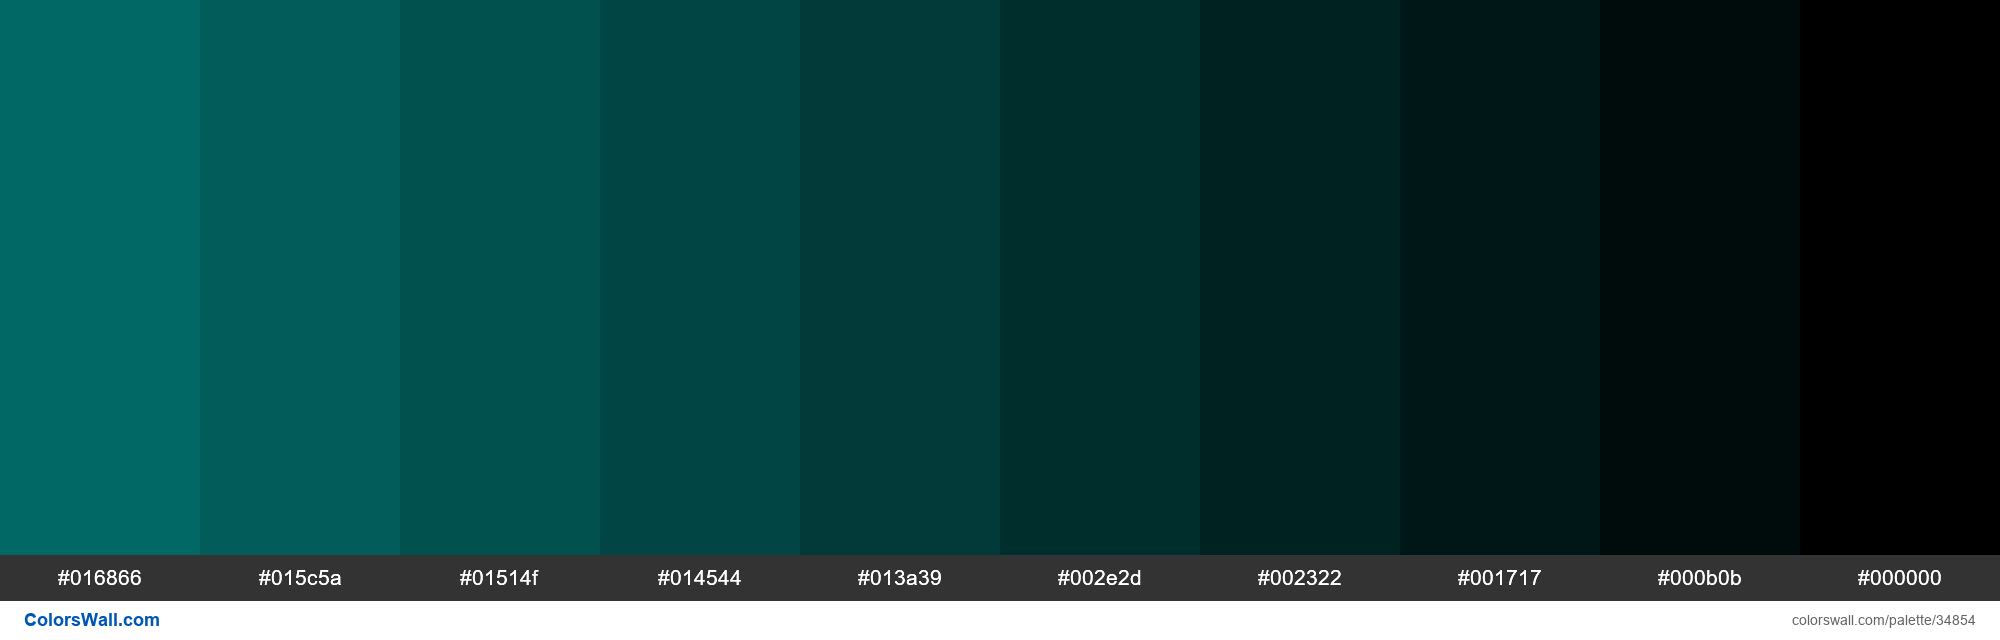 Shades XKCD Color dark aquamarine #017371 hex colors palette - ColorsWall